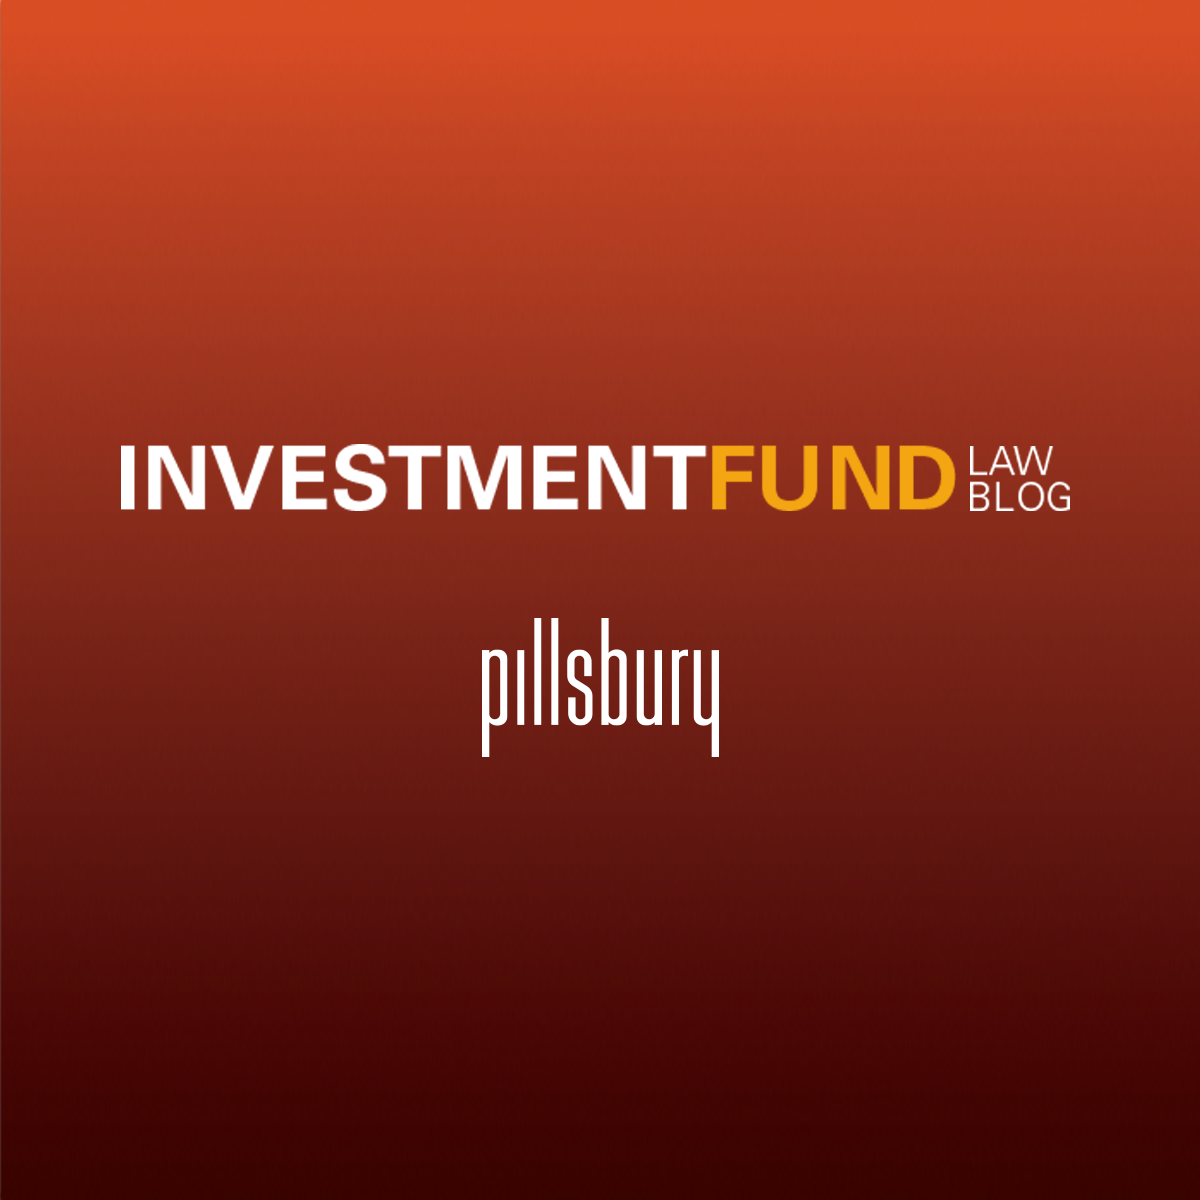 (c) Investmentfundlawblog.com